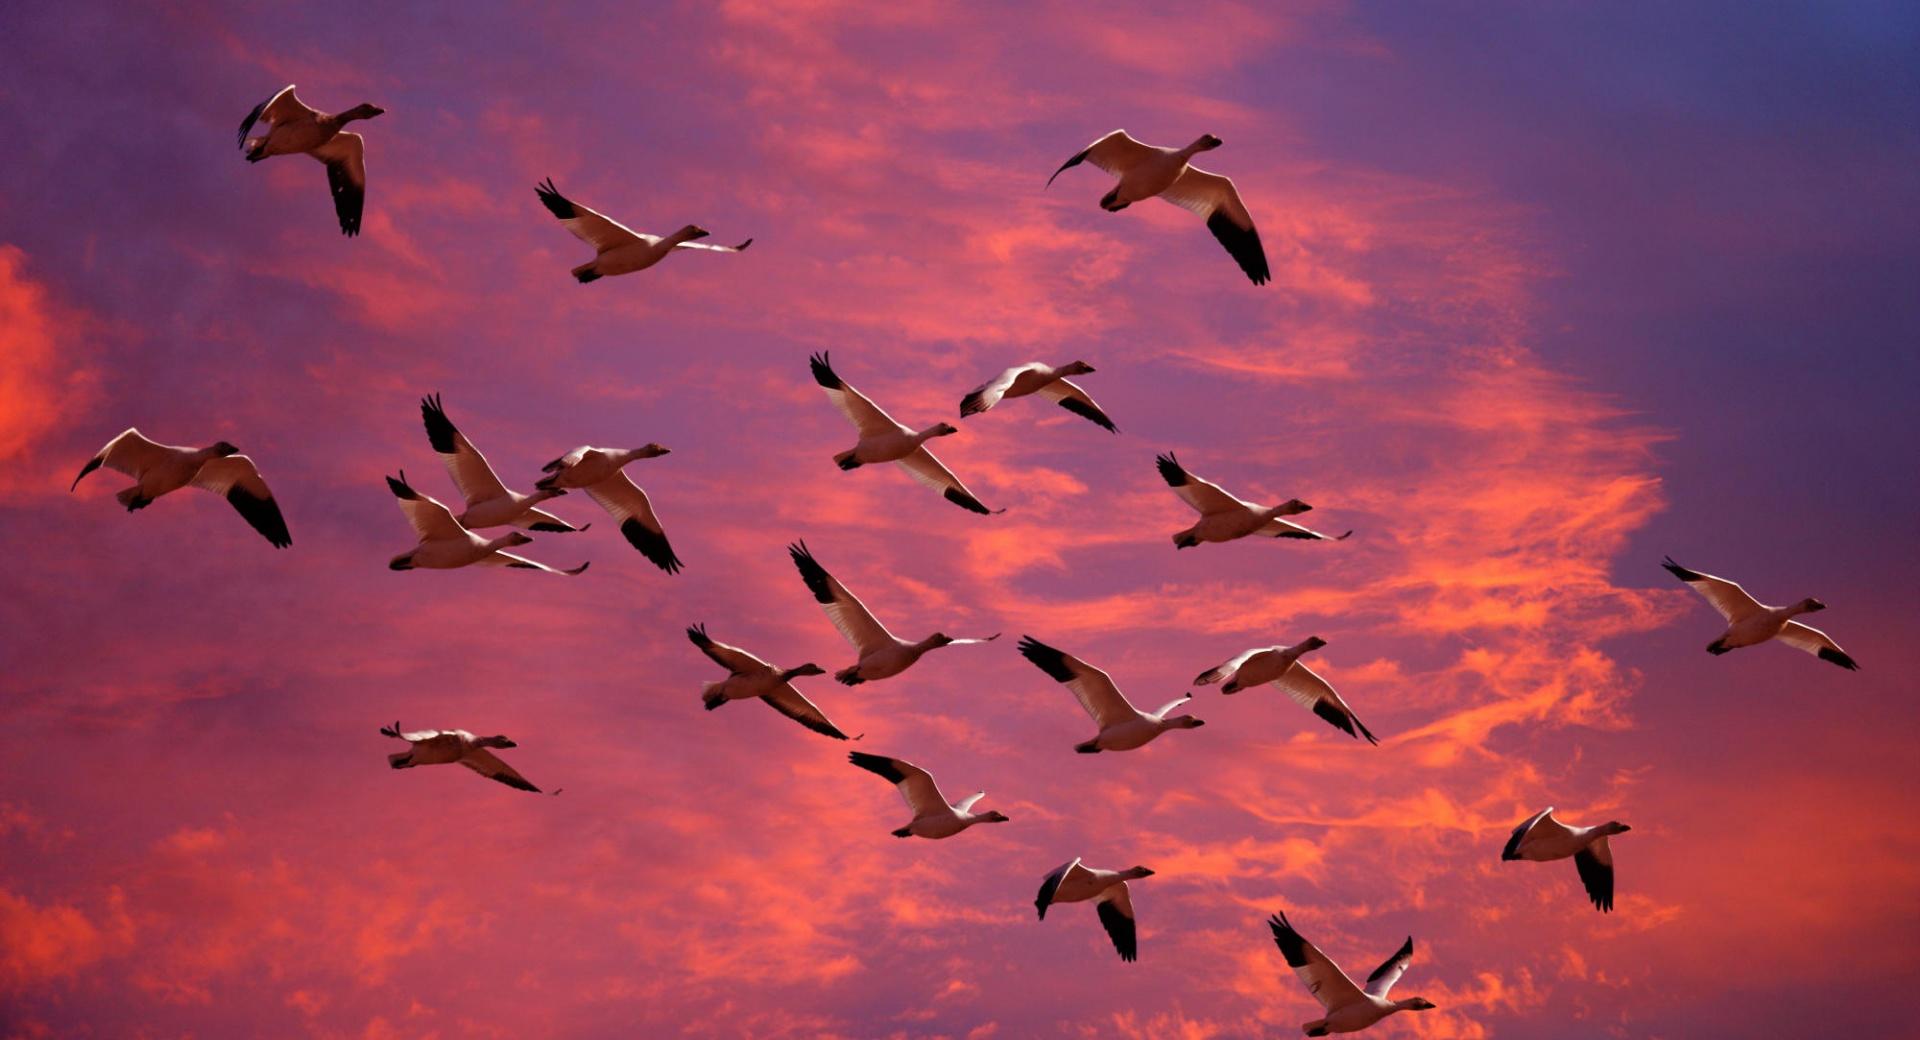 Migrating Snow Geese Skagit Flats Washington at 1024 x 1024 iPad size wallpapers HD quality